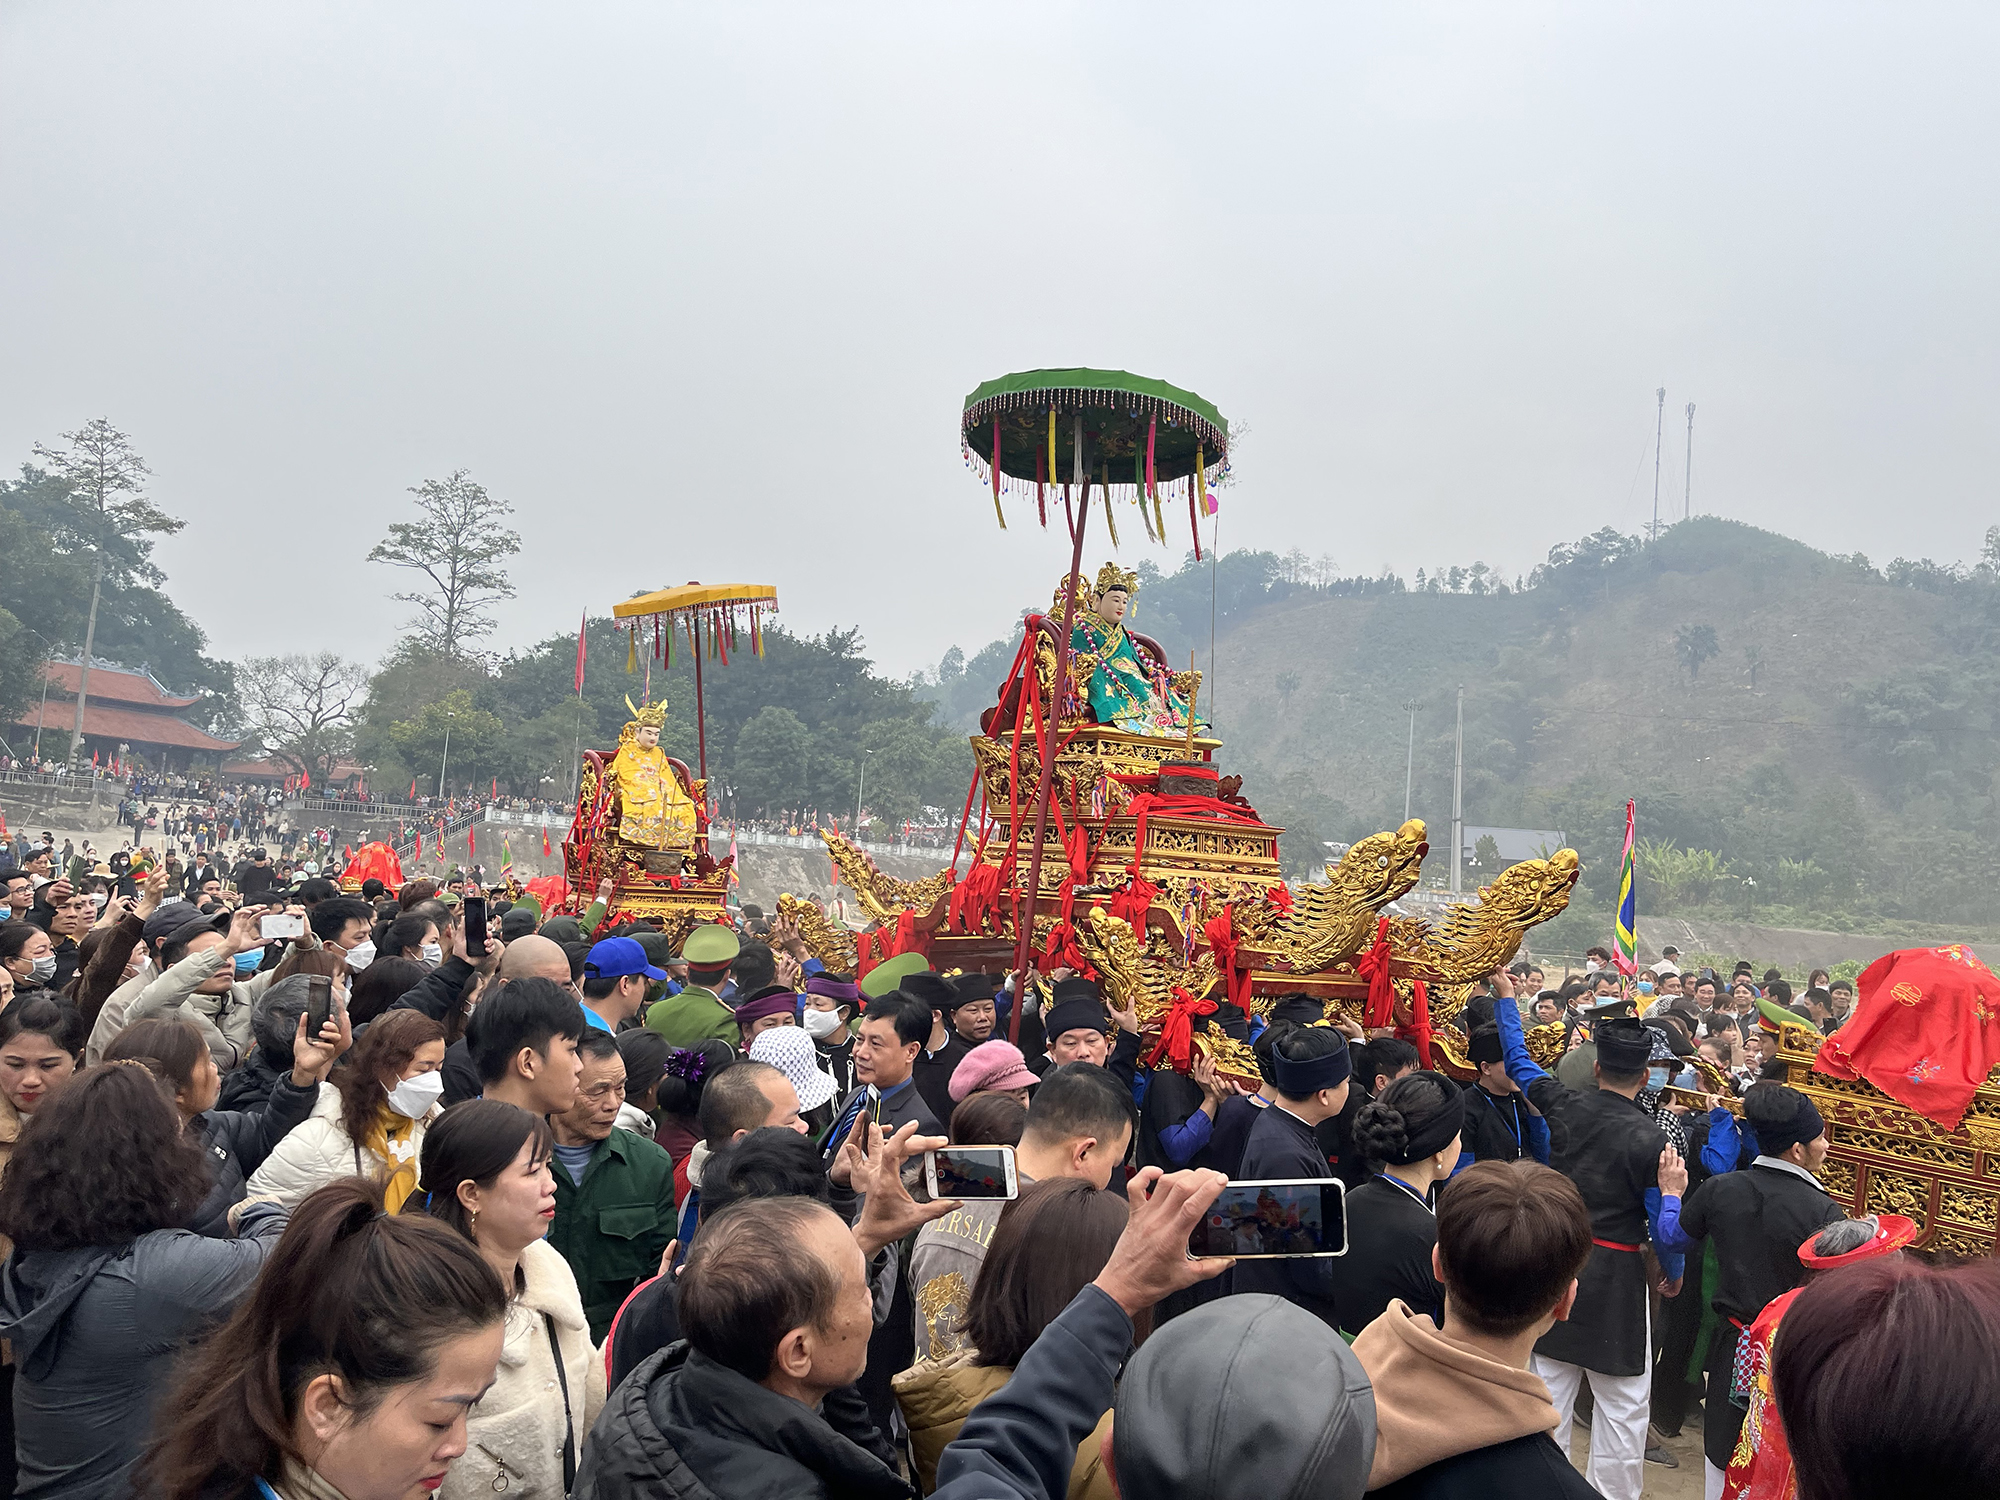 Procession, Dong Cuong Temple, Yên Bai province, source: Peter Larsen